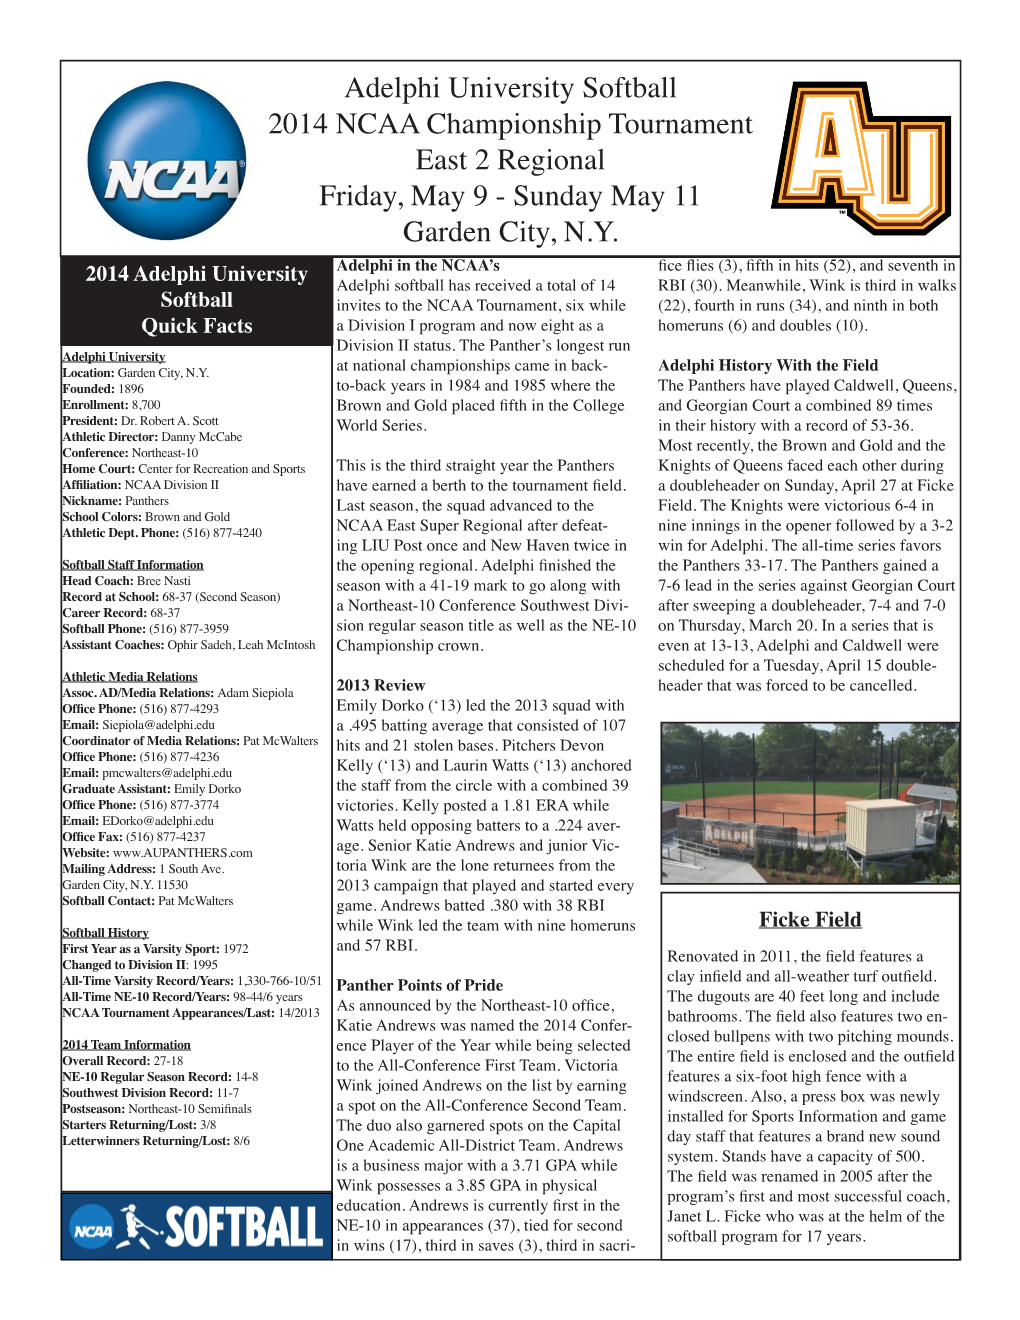 Adelphi University Softball 2014 NCAA Championship Tournament East 2 Regional Friday, May 9 - Sunday May 11 Garden City, N.Y